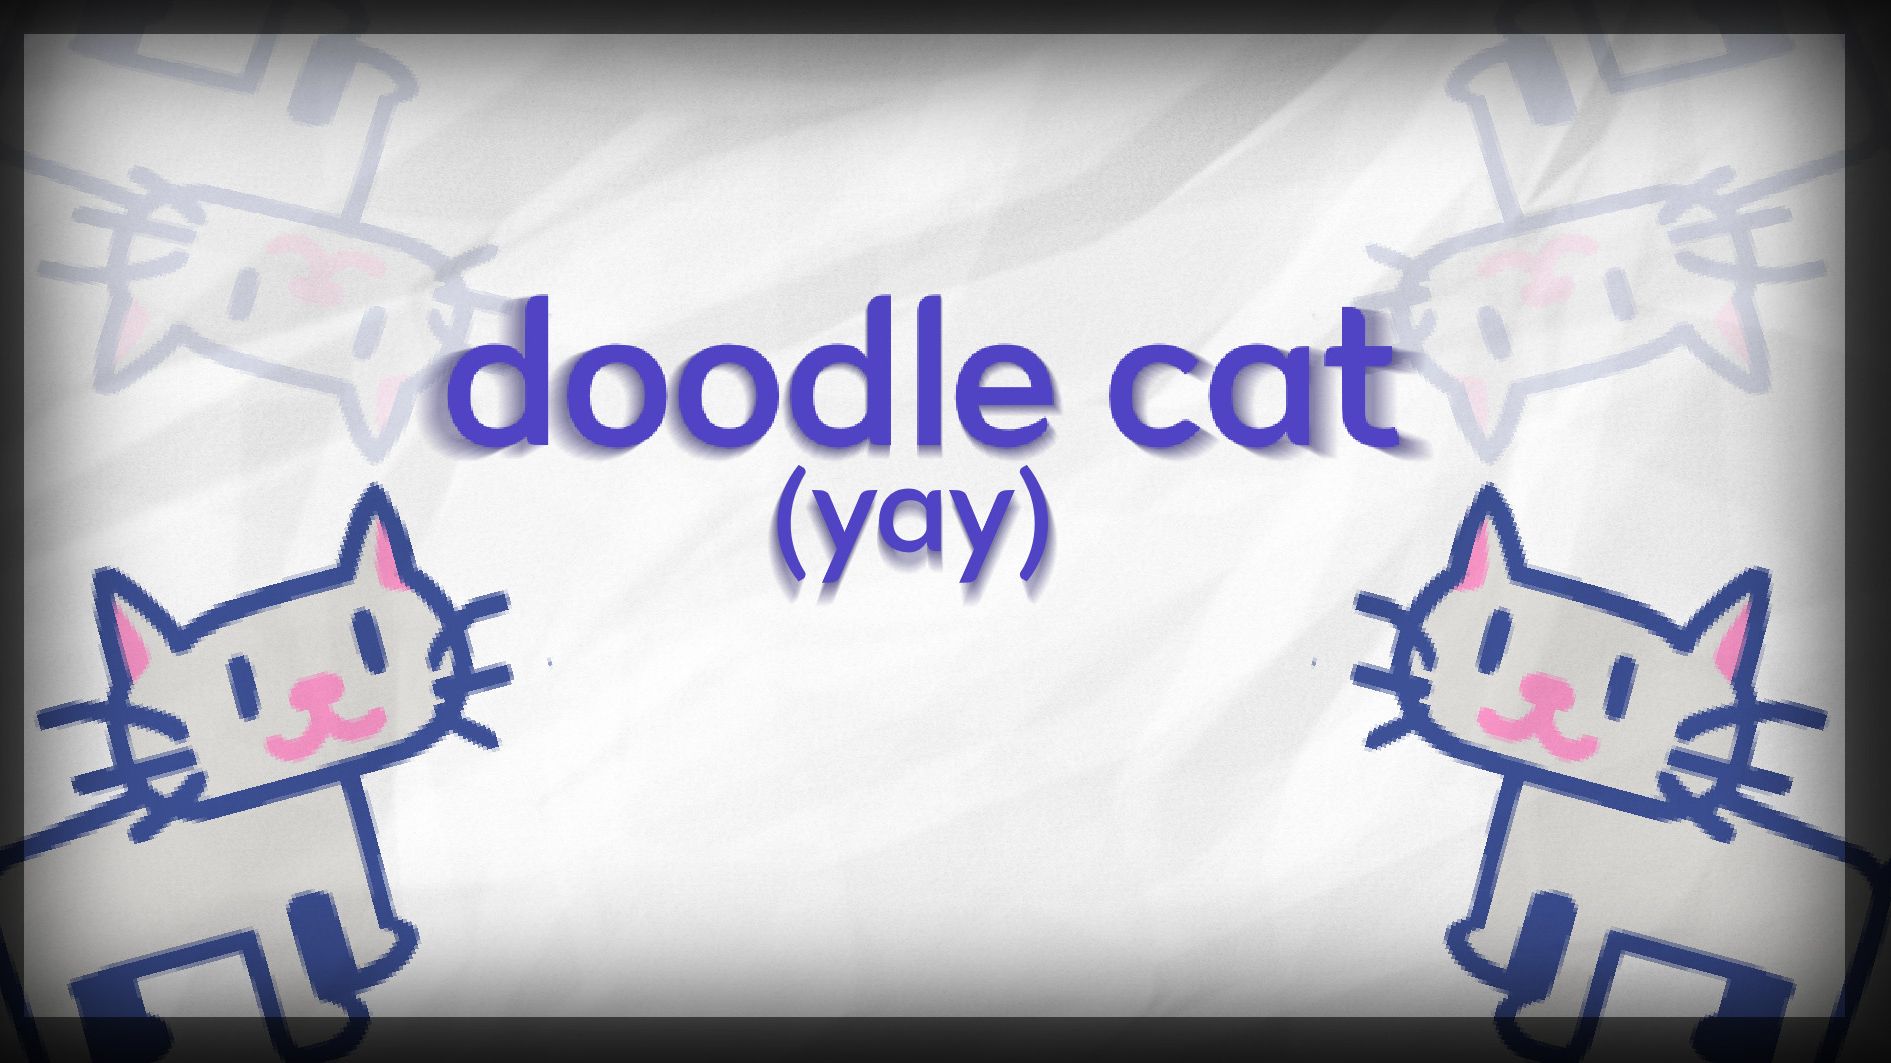 【FNF优质模组】治愈的画风 可爱的猫咪 DOODLE CAT [One-shot]